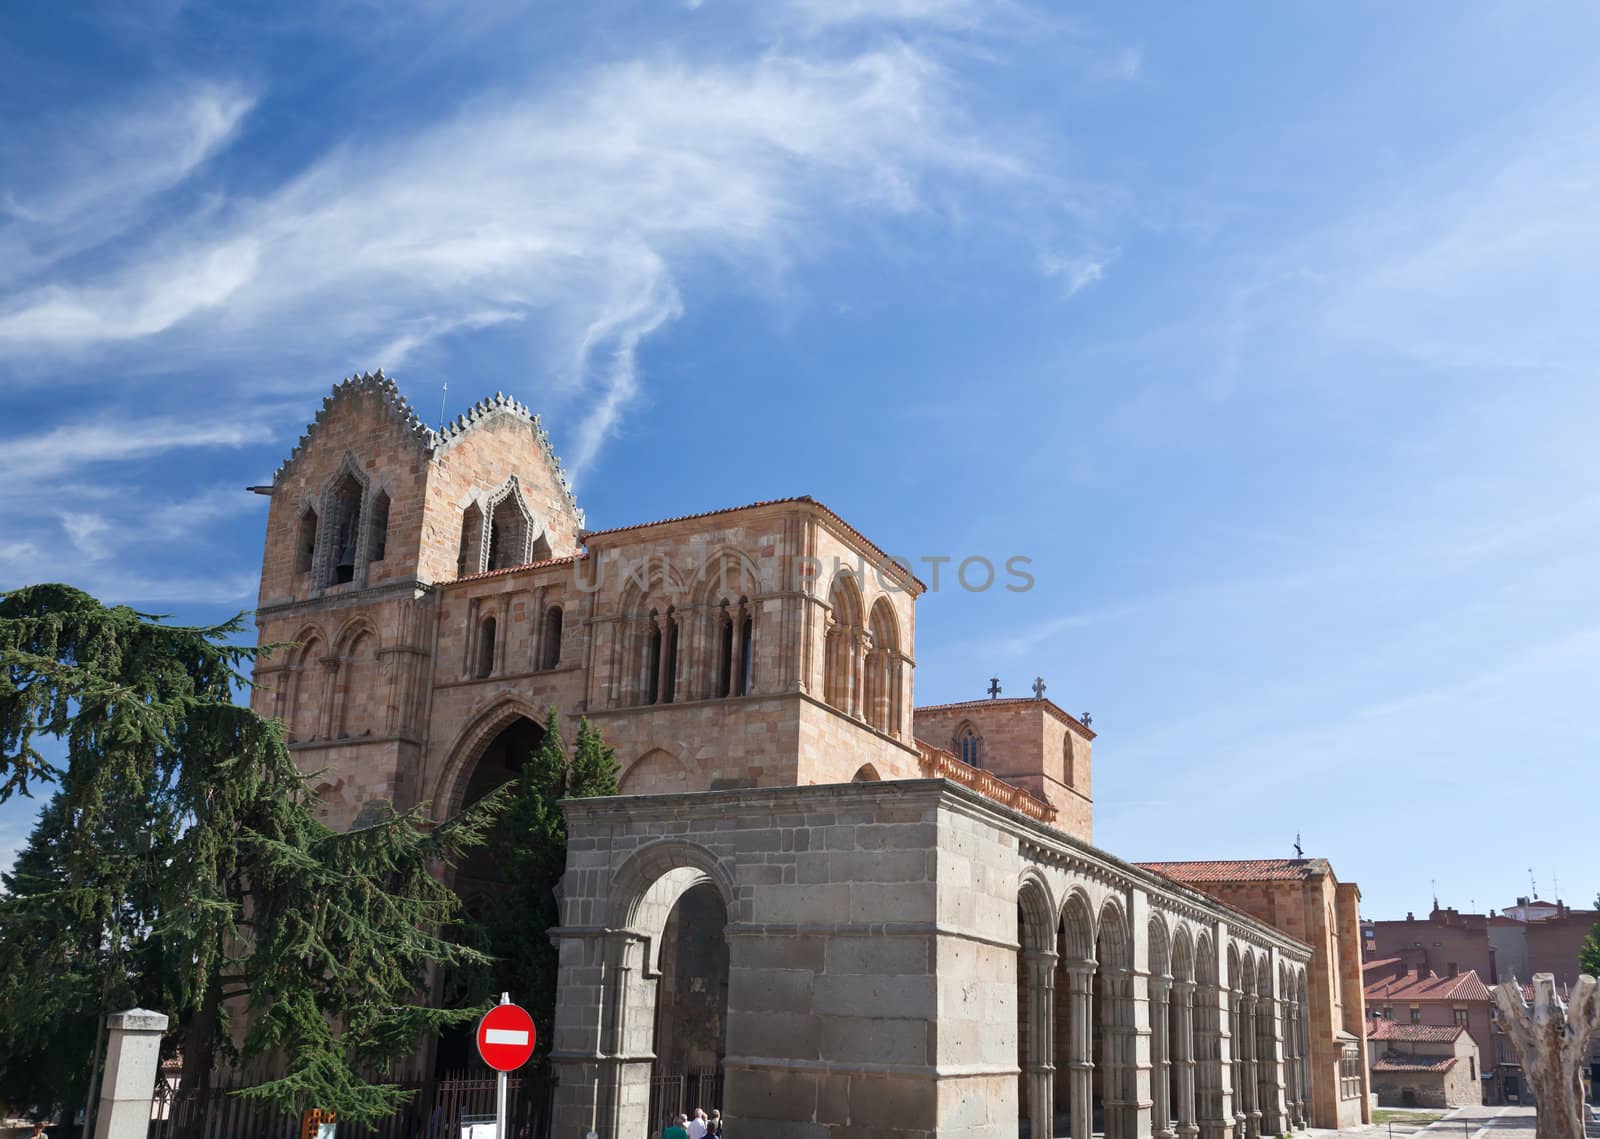 The San Vicente Basilica in Avila by gary718